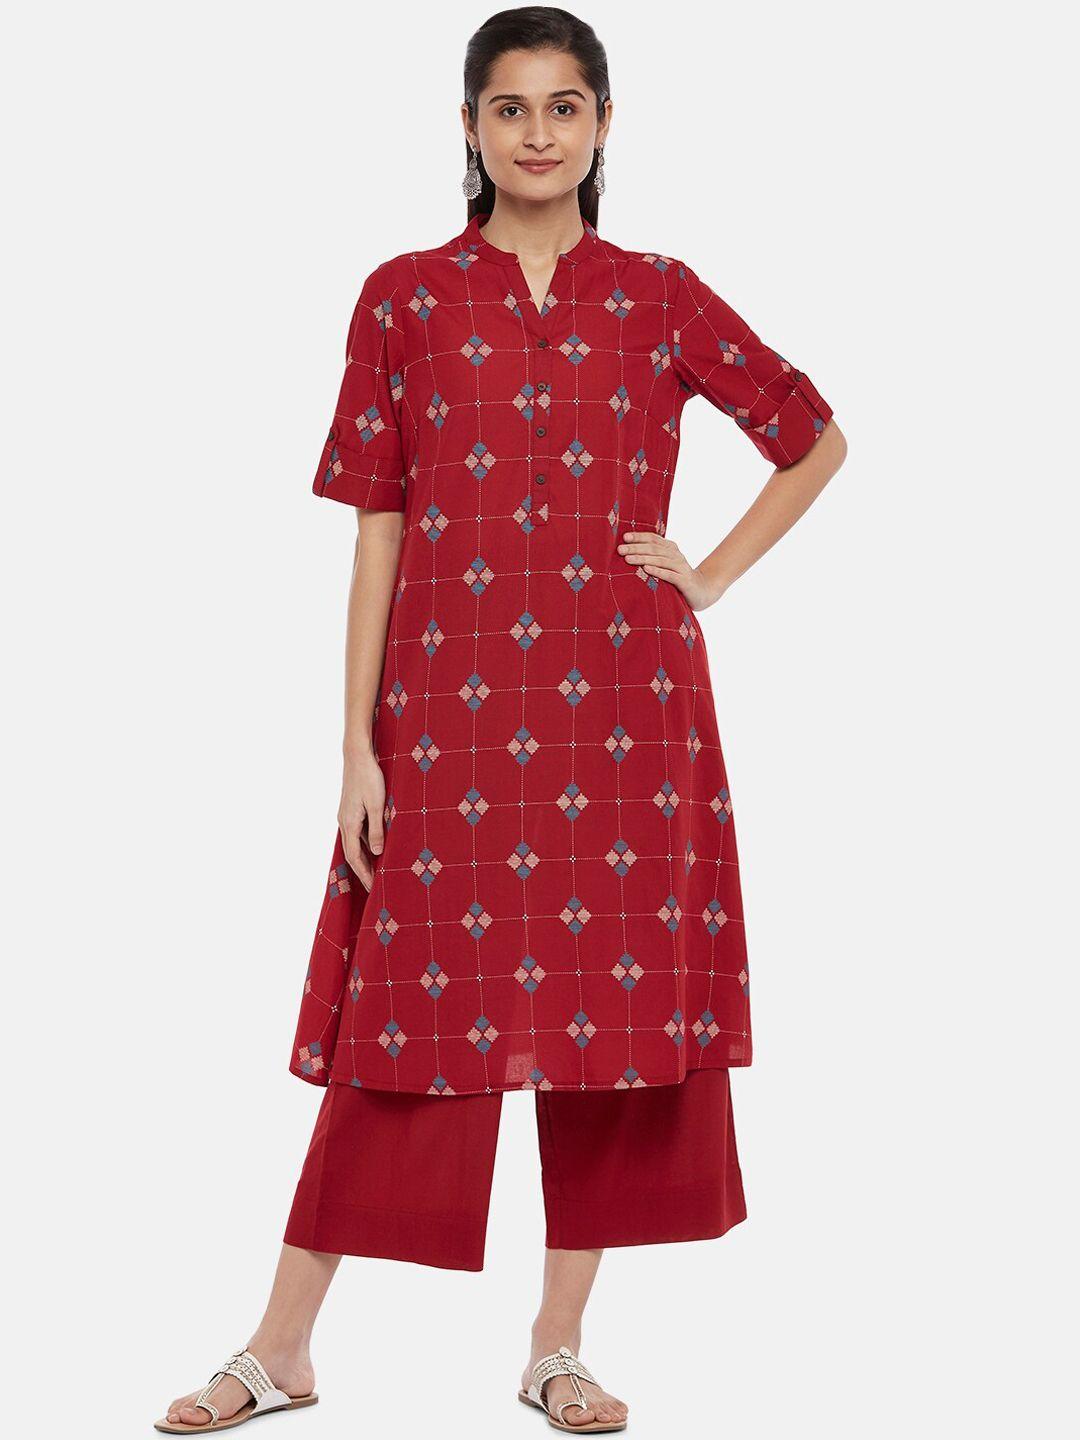 rangmanch-by-pantaloons-women-red-printed-pure-cotton-kurta-set